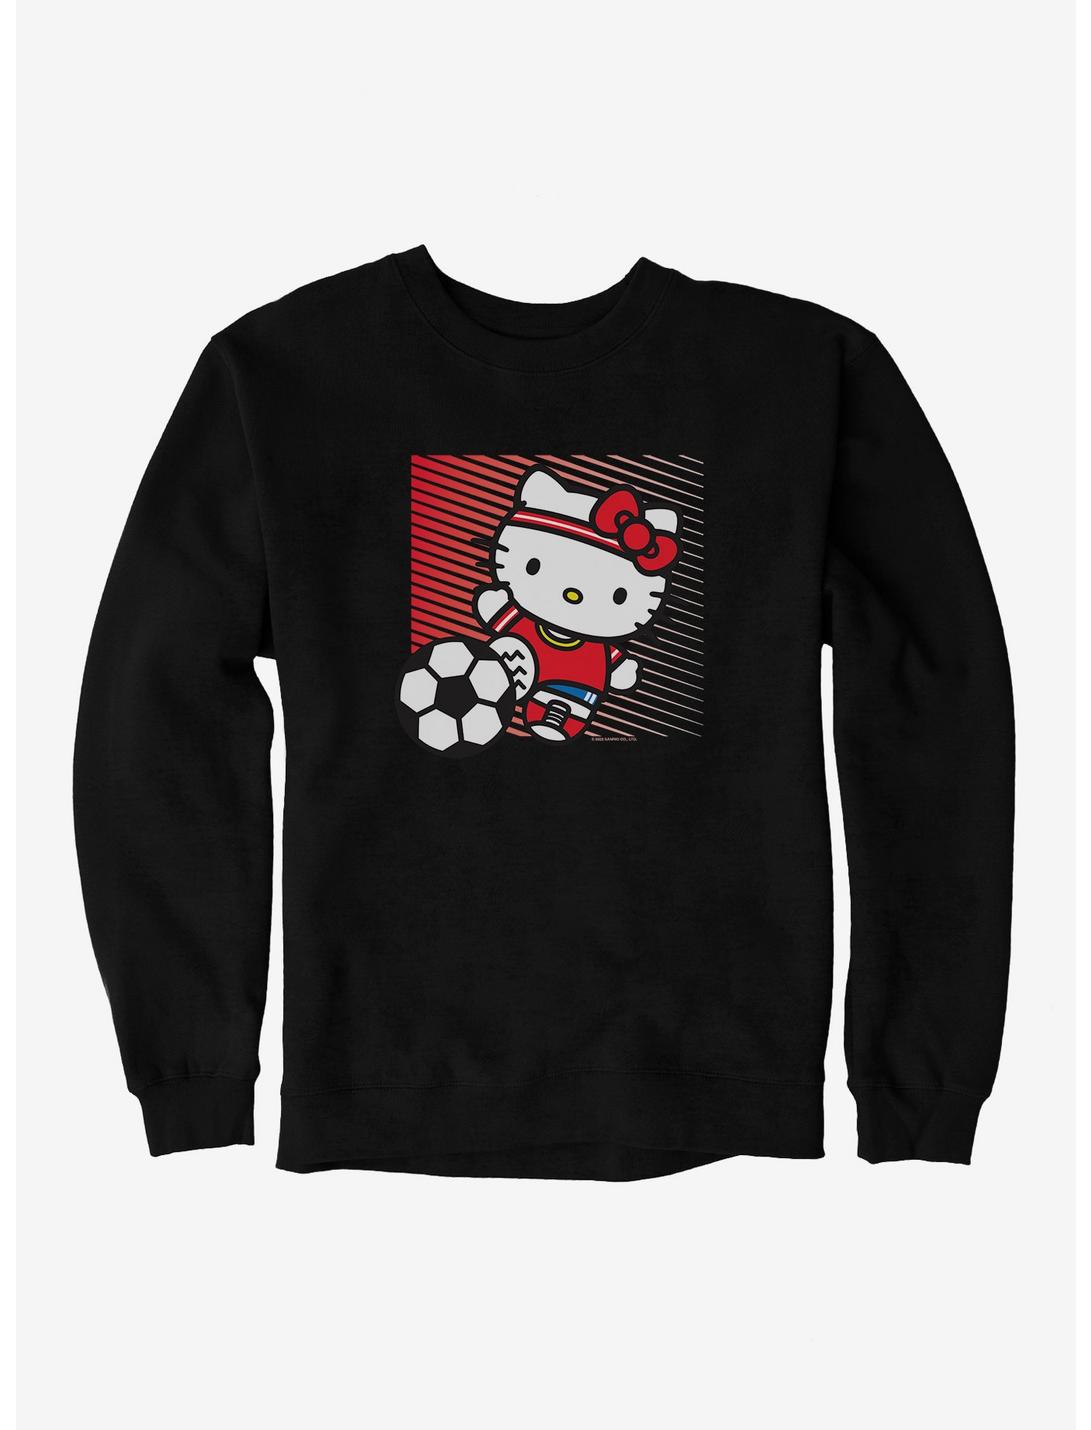 Hello Kitty Soccer Speed Sweatshirt, , hi-res